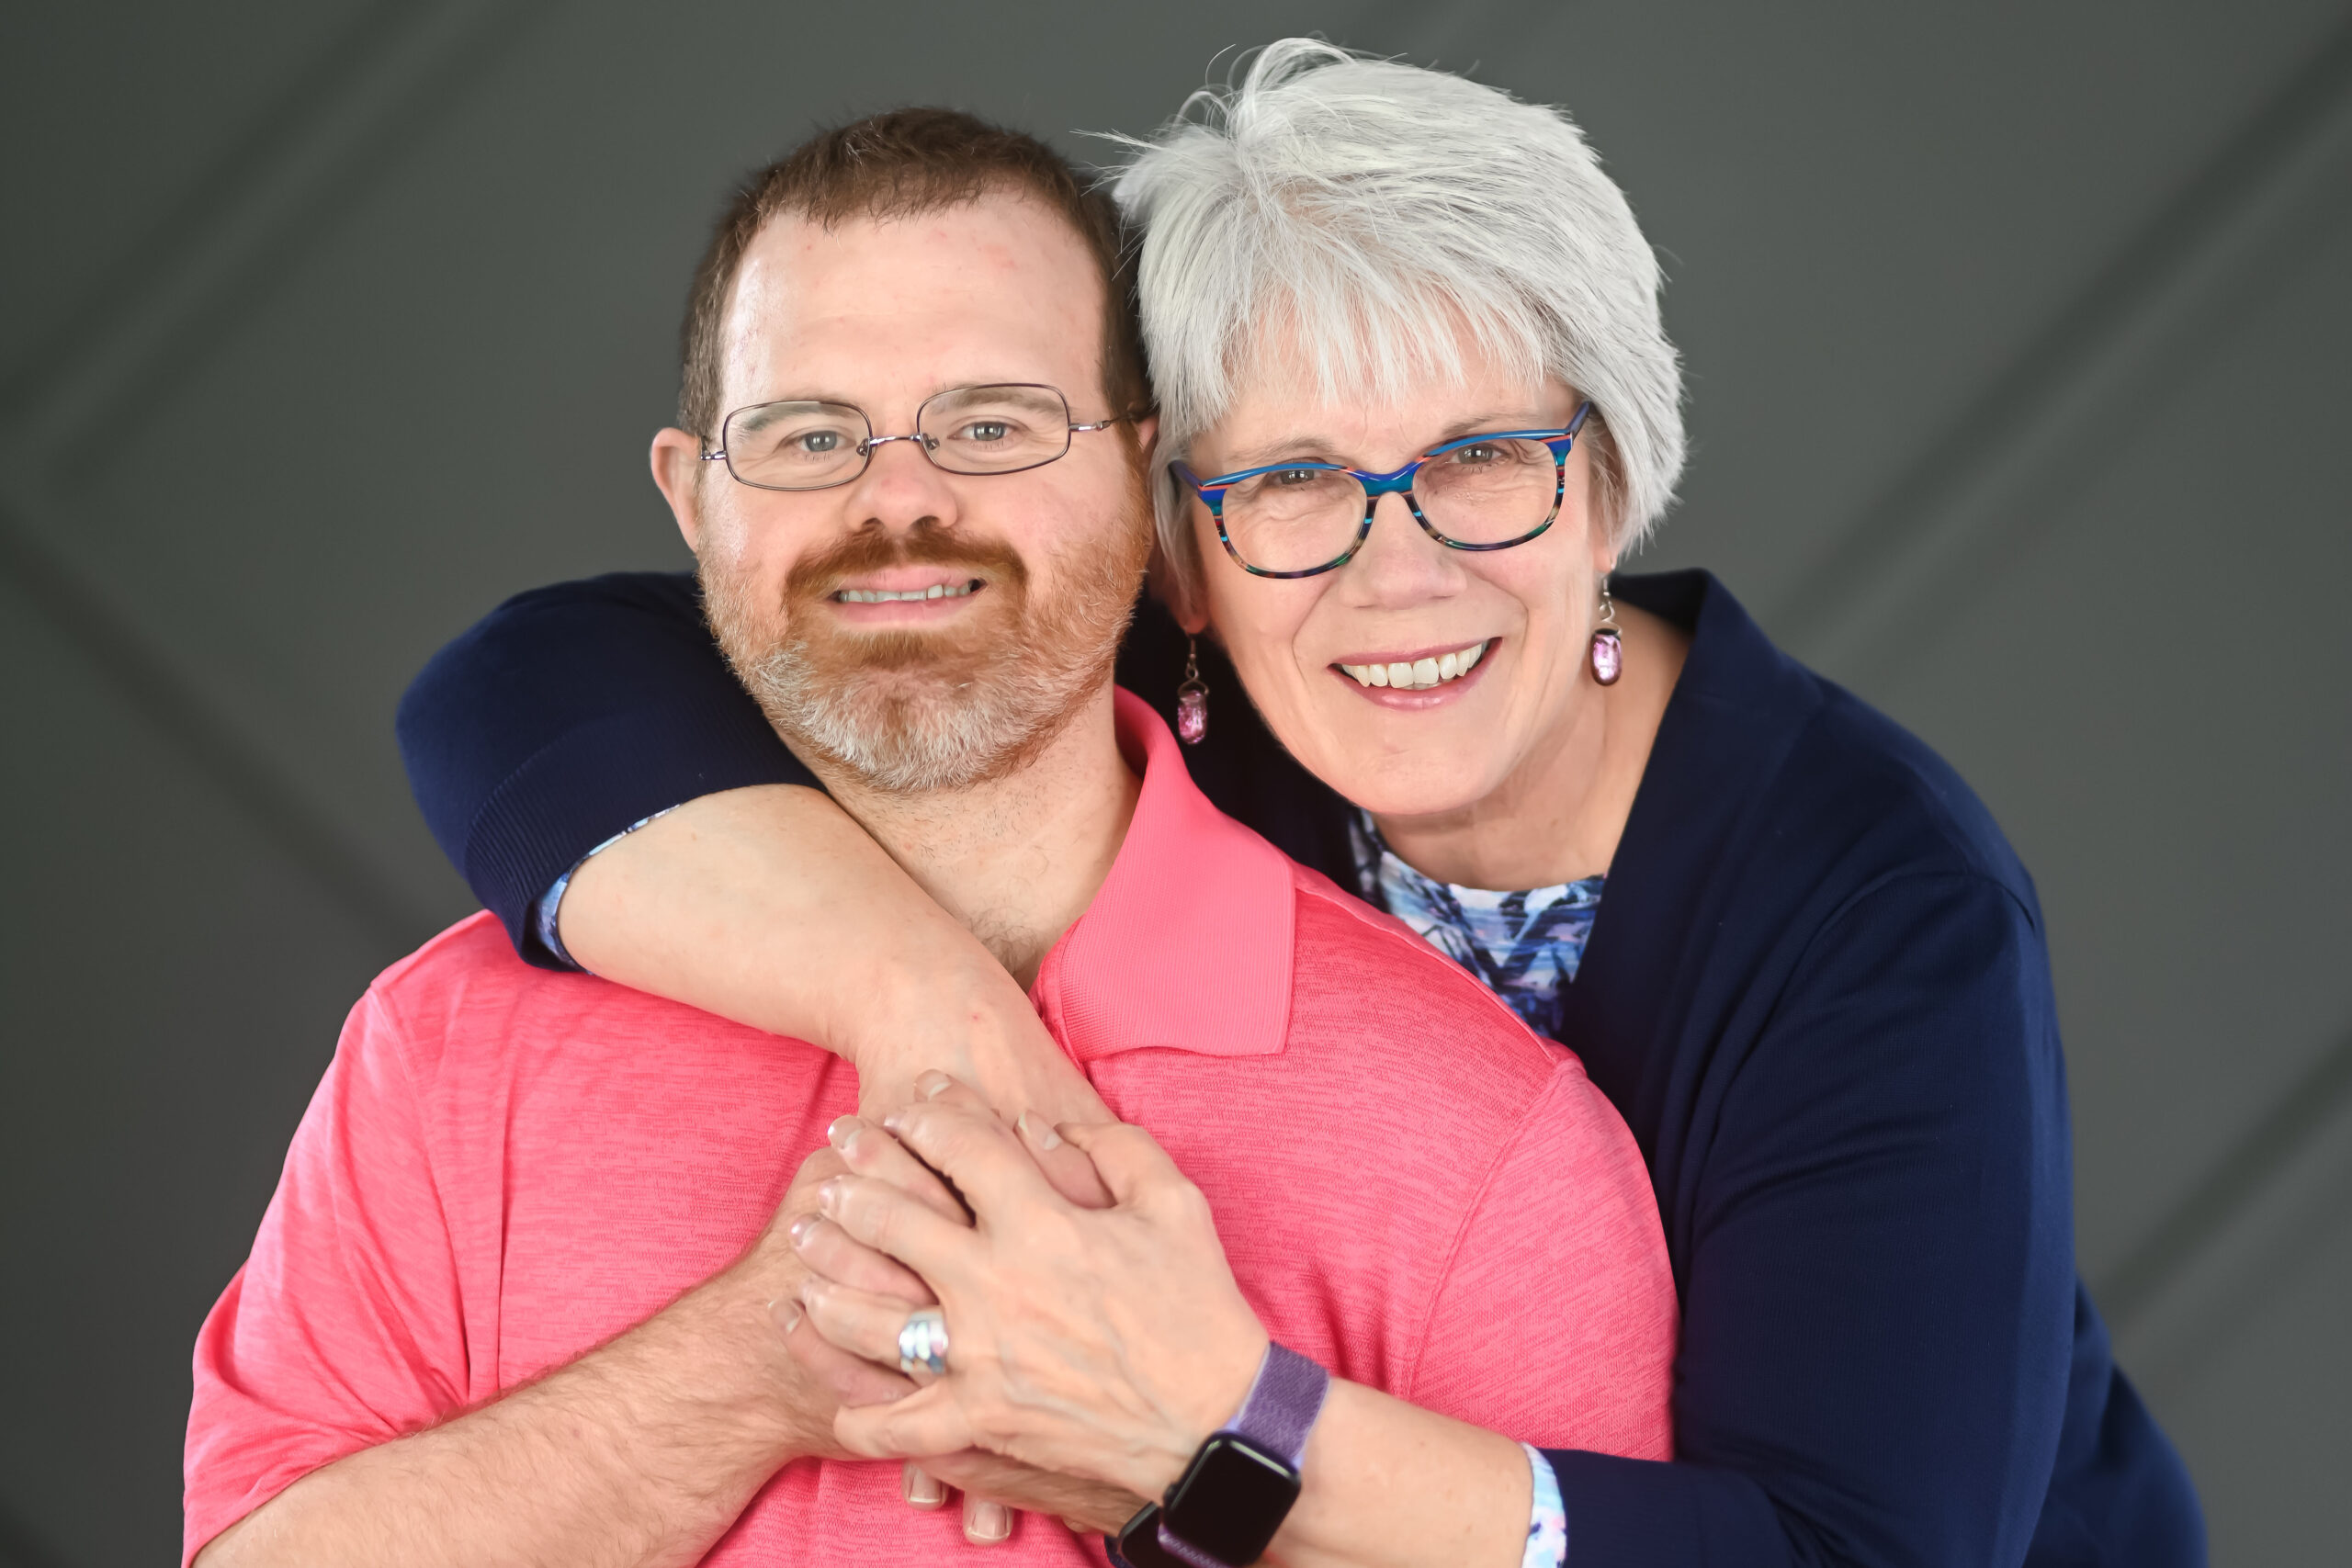 Justin Bainbridge and his mother Kim Bainbridge have become Down syndrome advocates and educators&period;